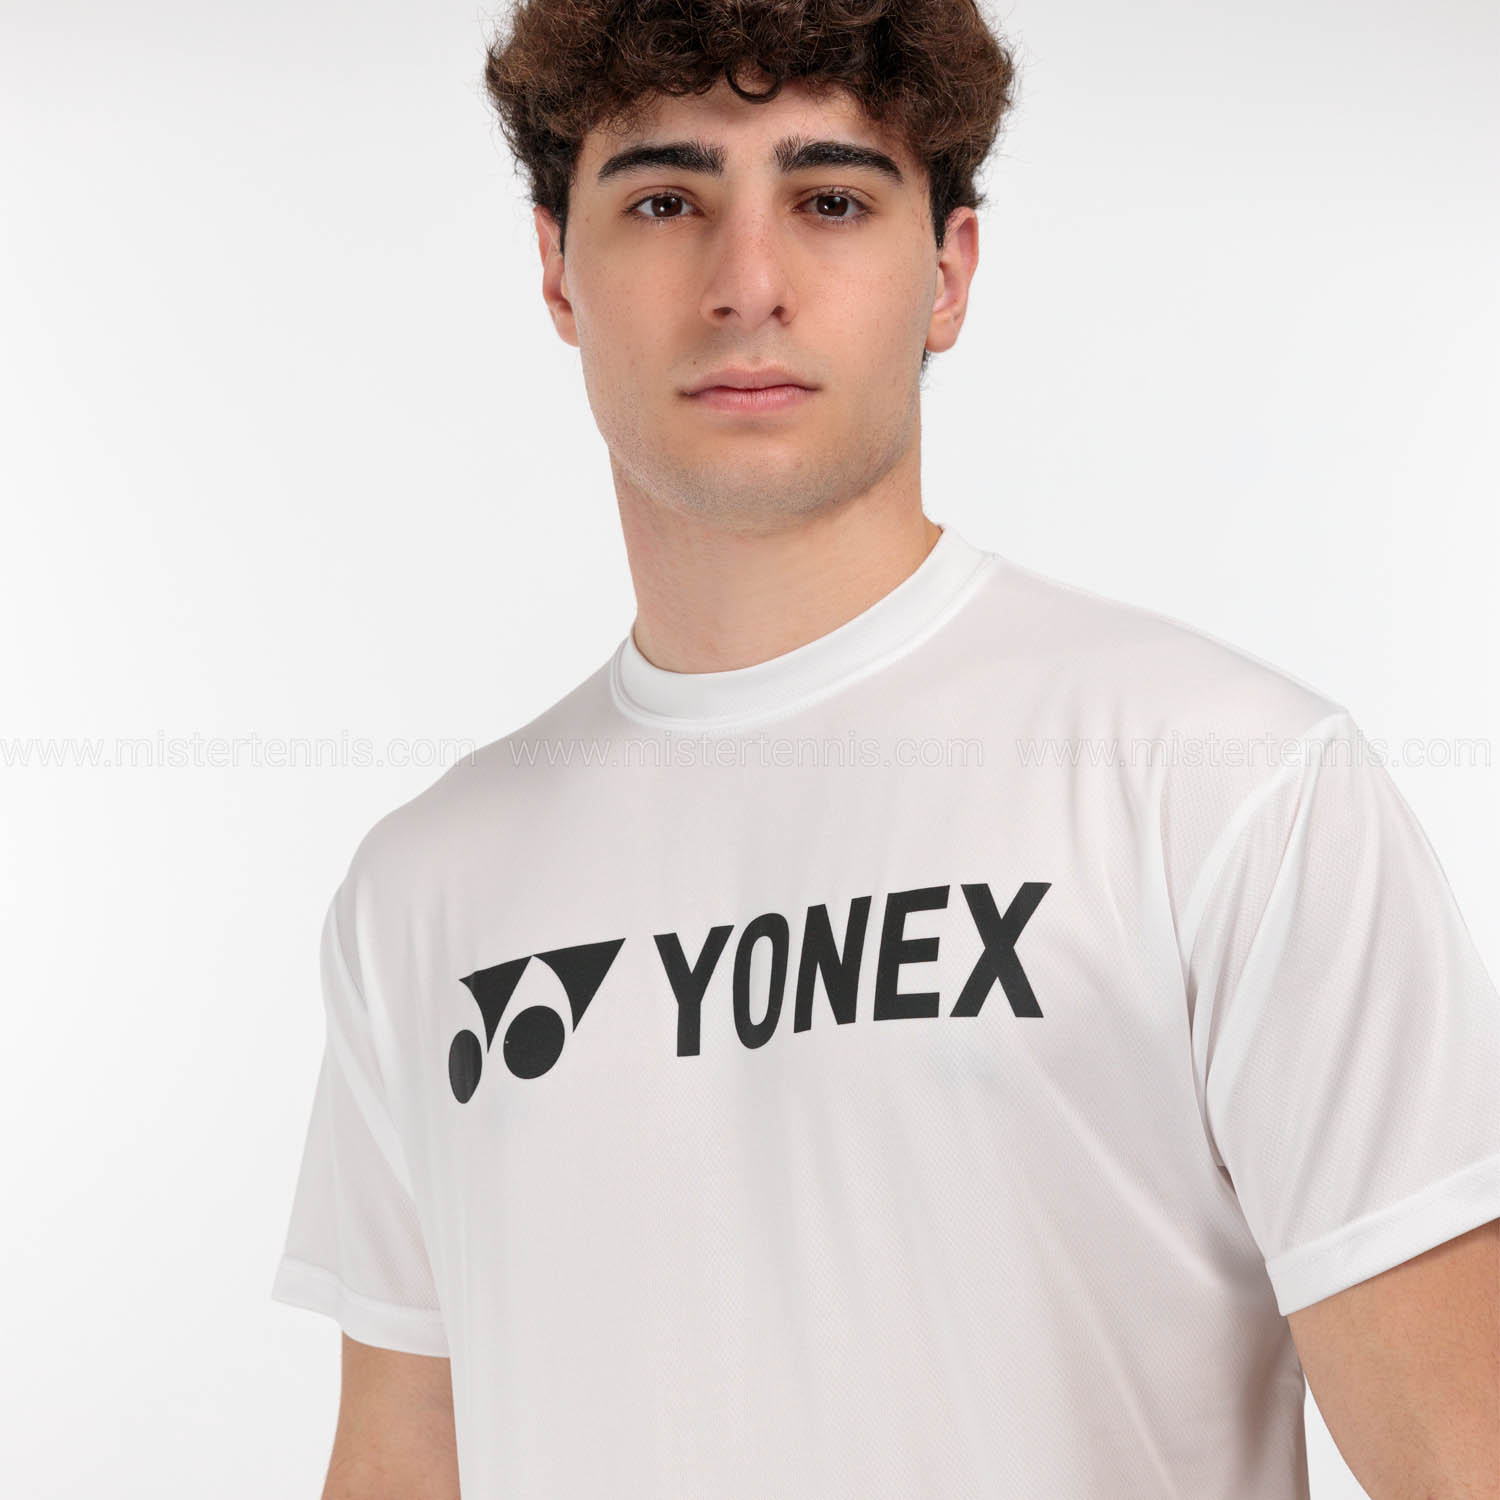 Yonex Club Logo T-Shirt - White